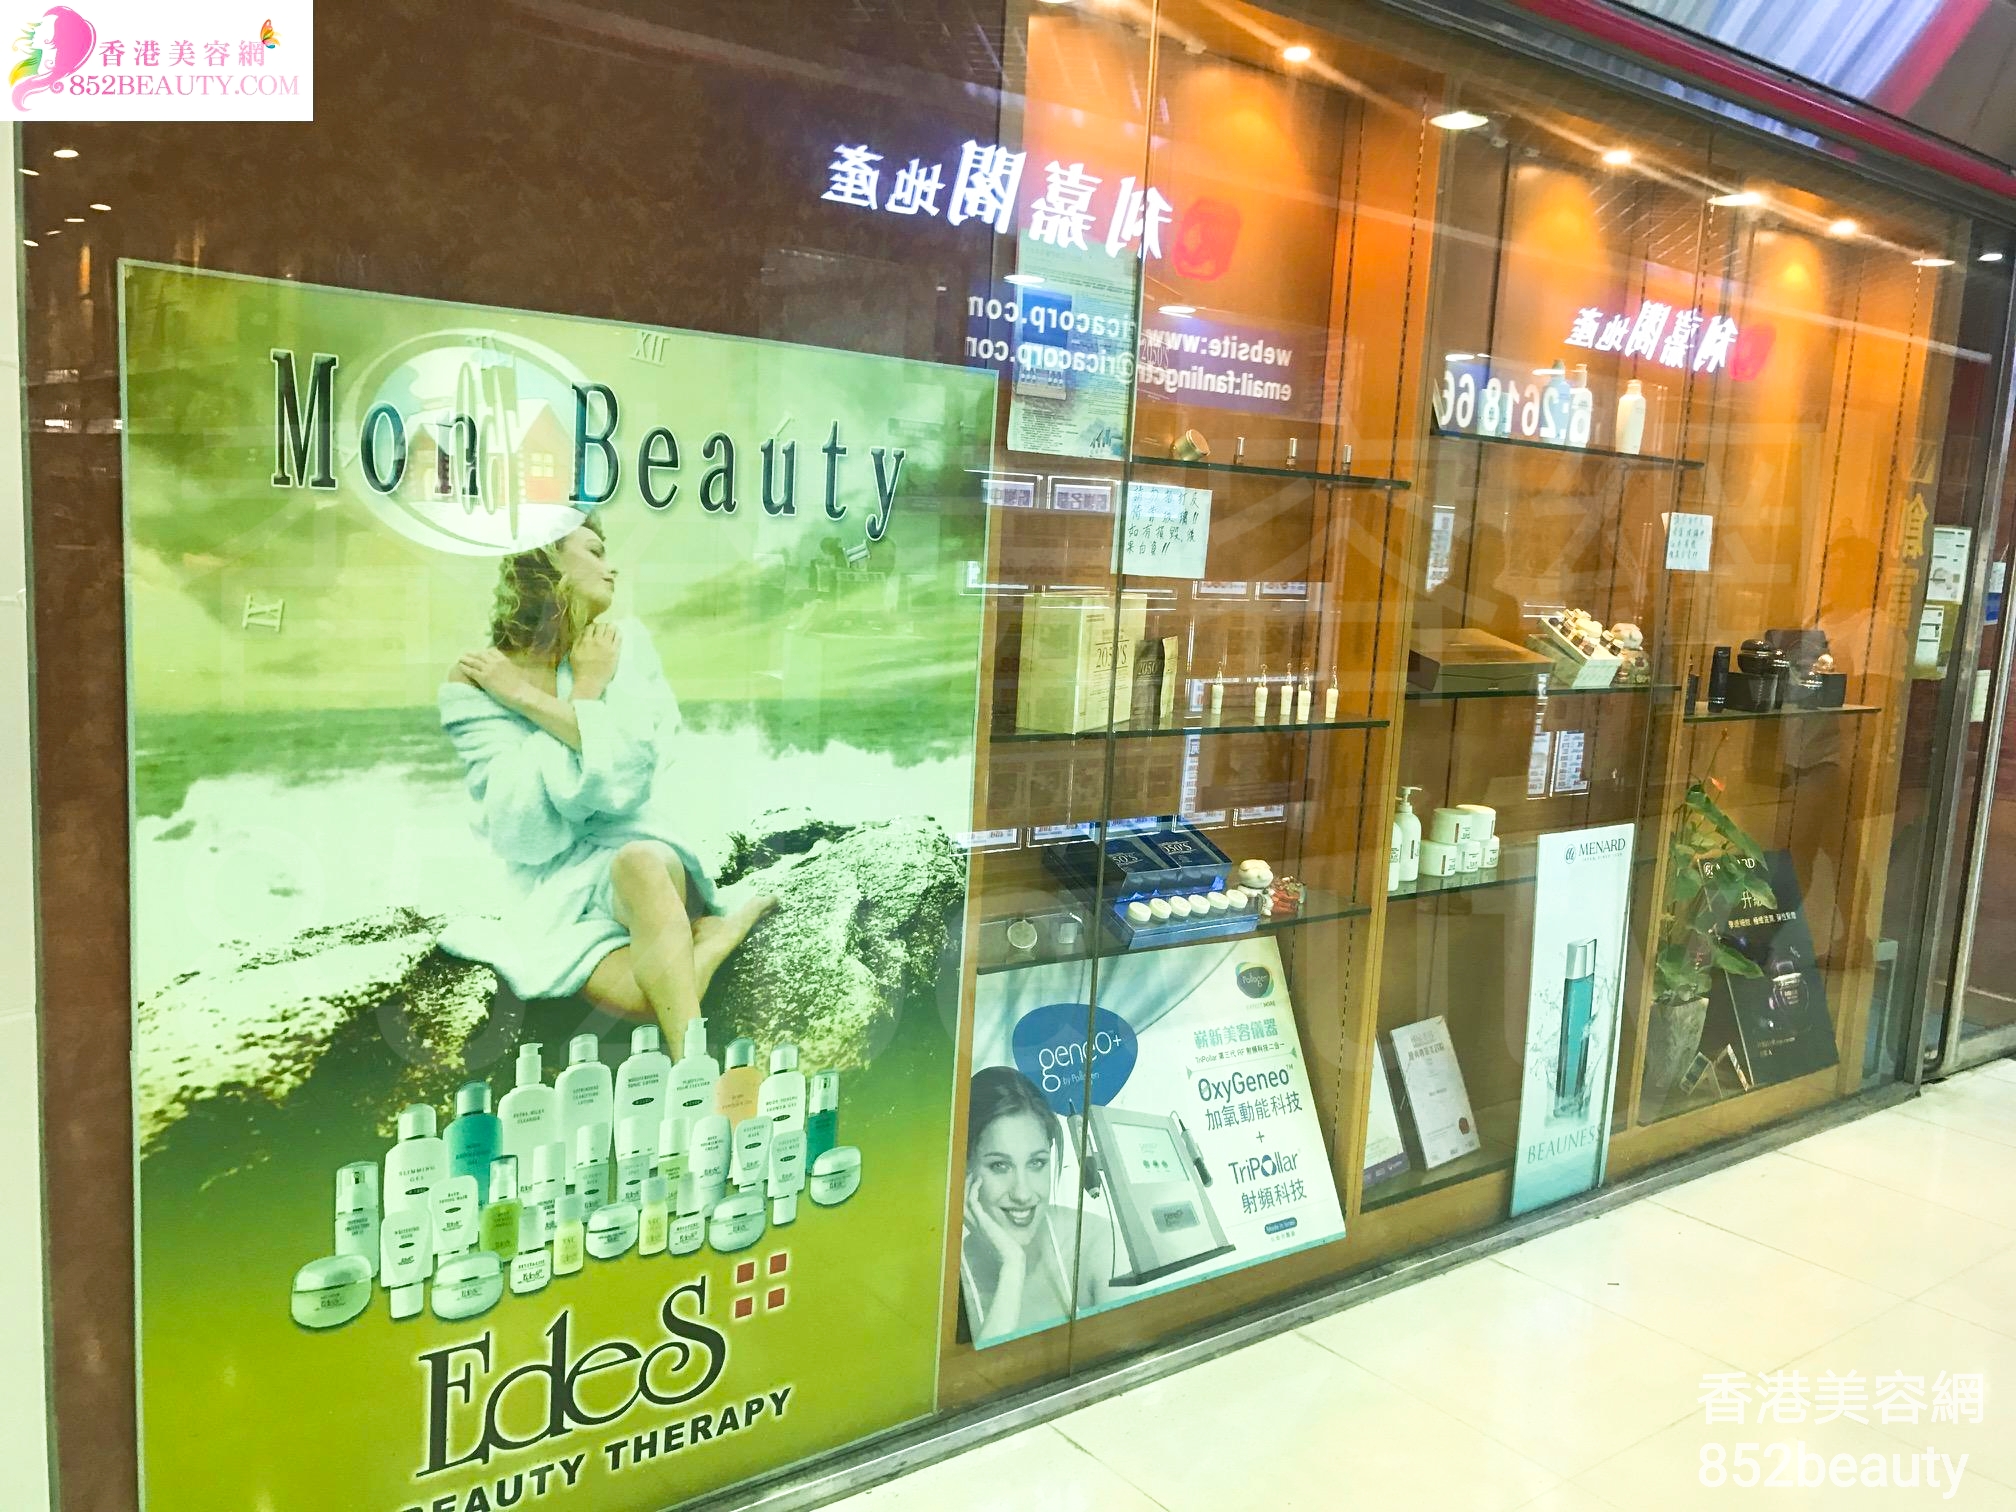 香港美容網 Hong Kong Beauty Salon 美容院 / 美容師: Mon Beauty